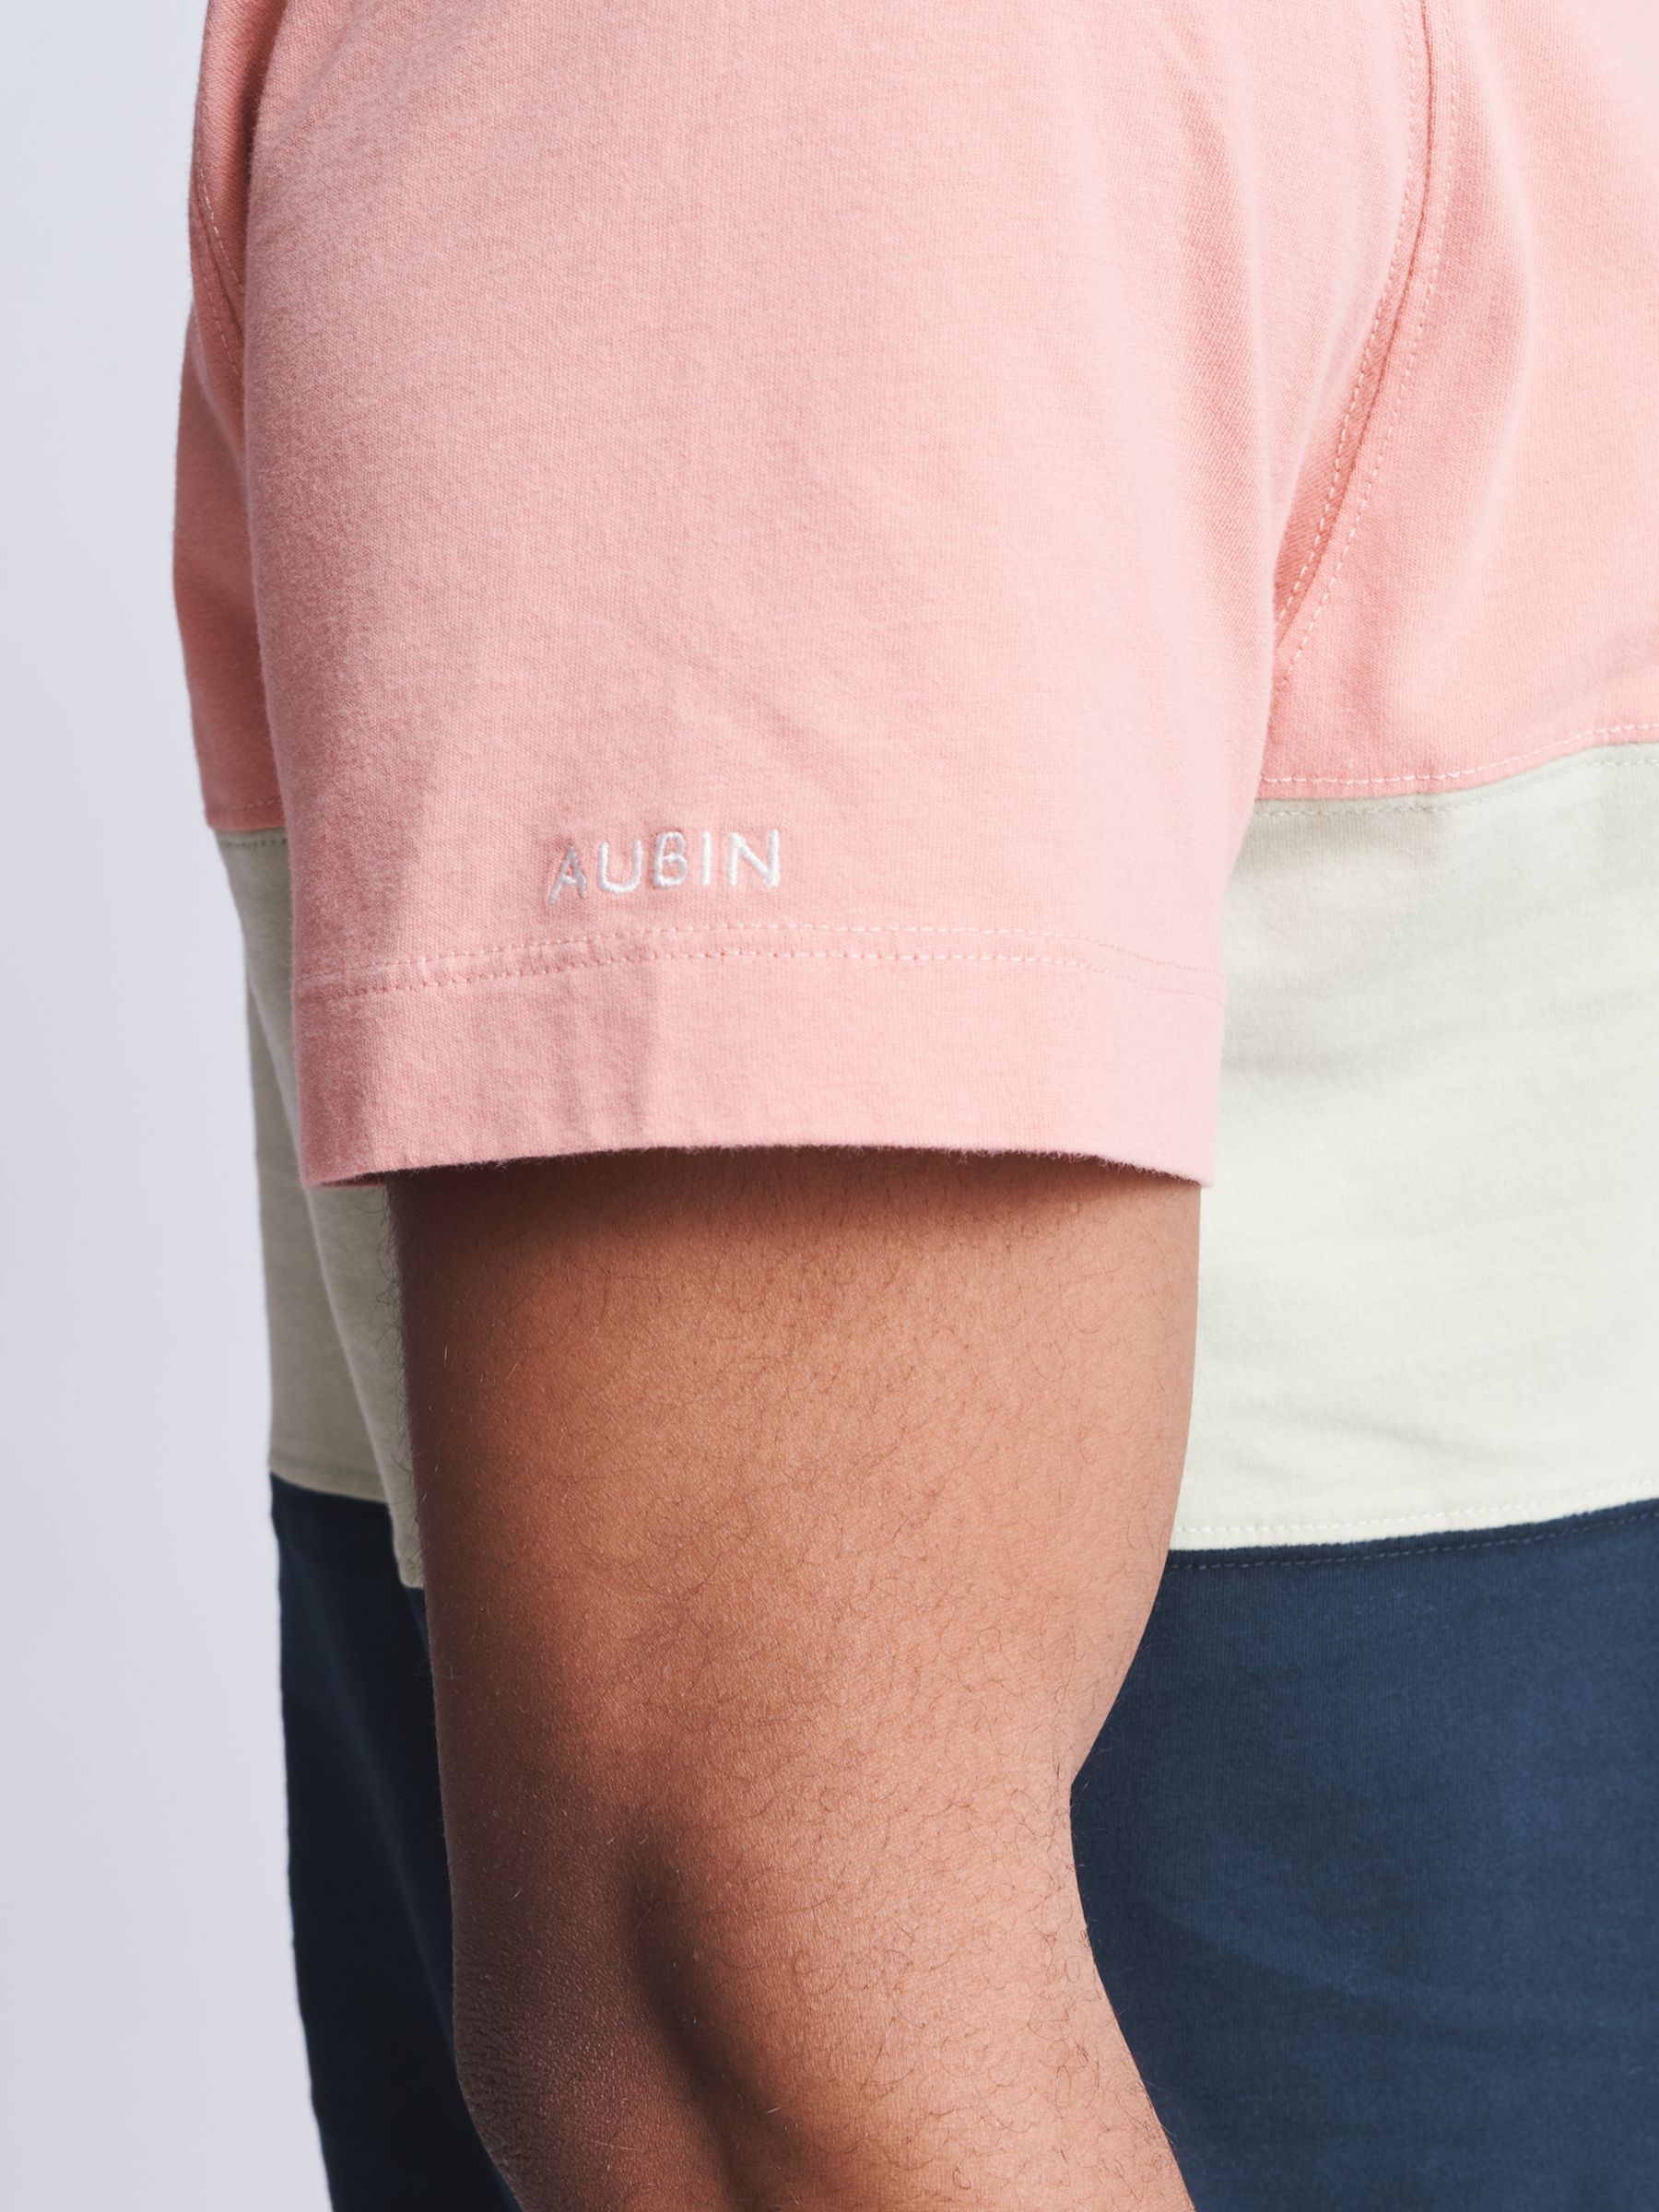 Aubin Calder Cut & Sew T-Shirt, Multi, S